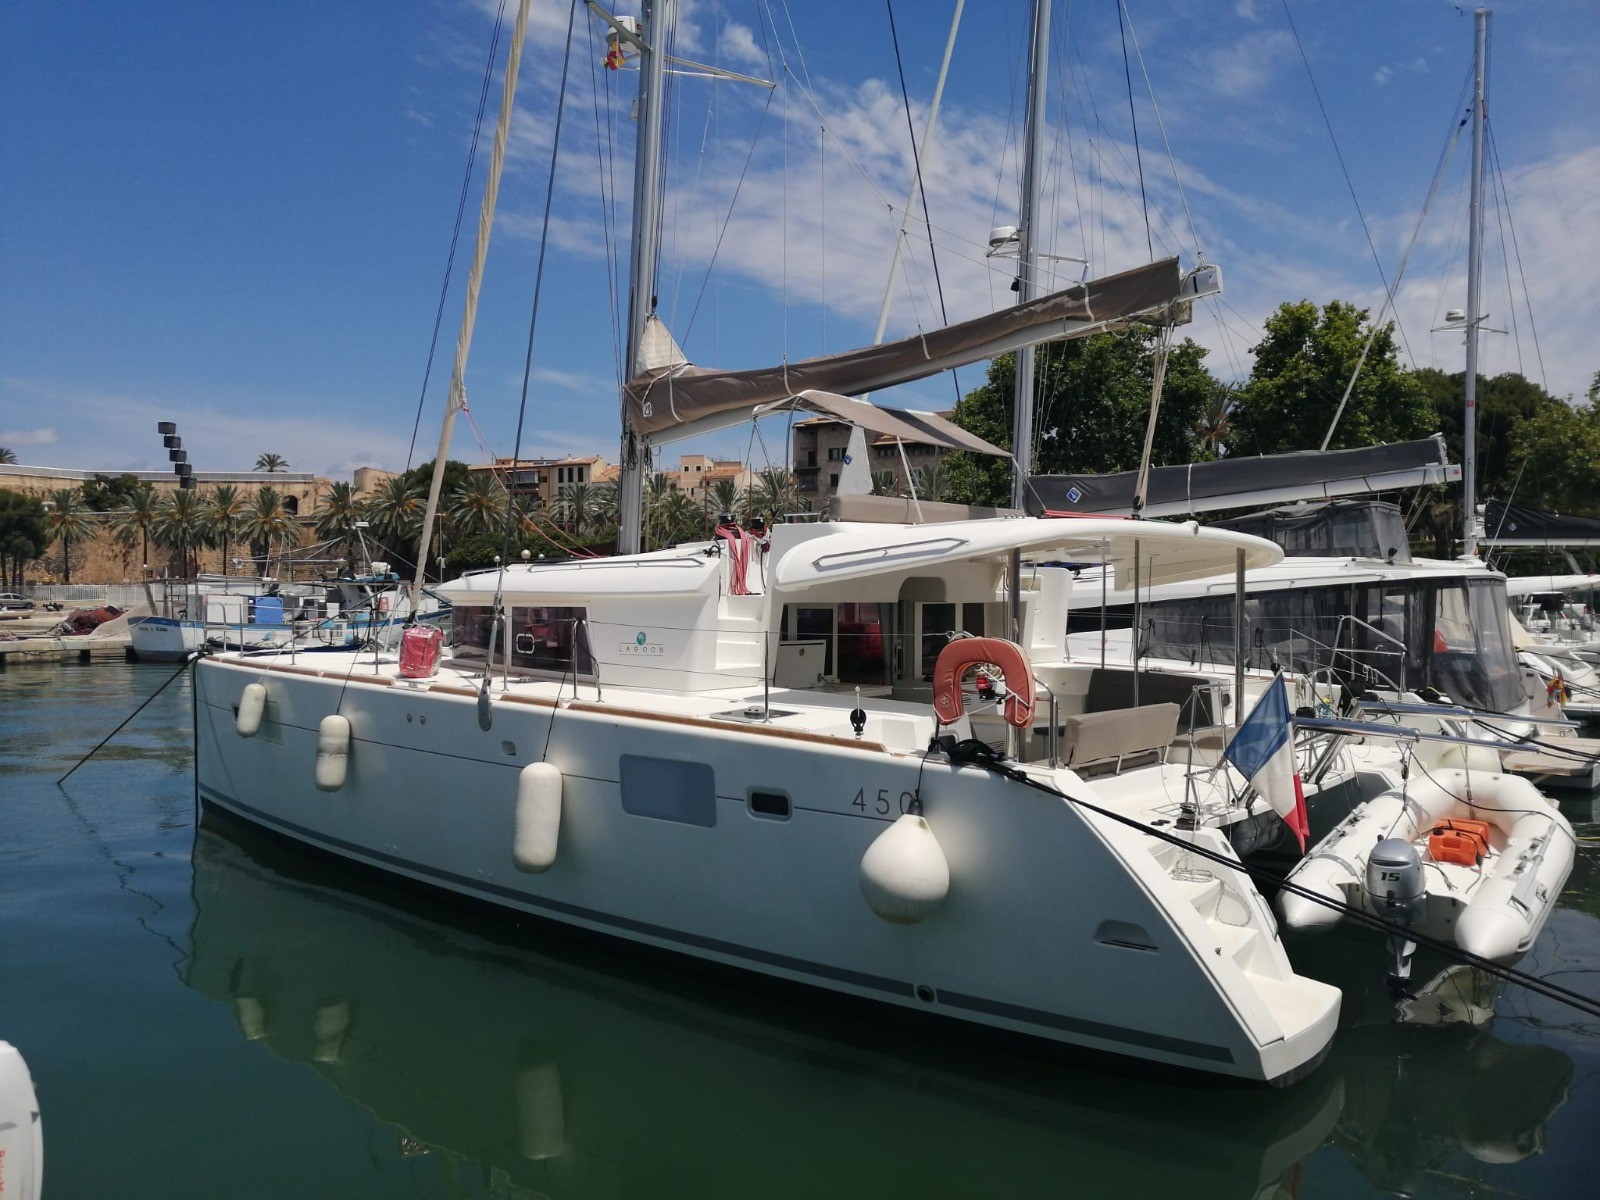 Catamaran FOR CHARTER, year 2015 brand Lagoon and model 450 Flybridge, available in Muelle de la Lonja Palma Mallorca España